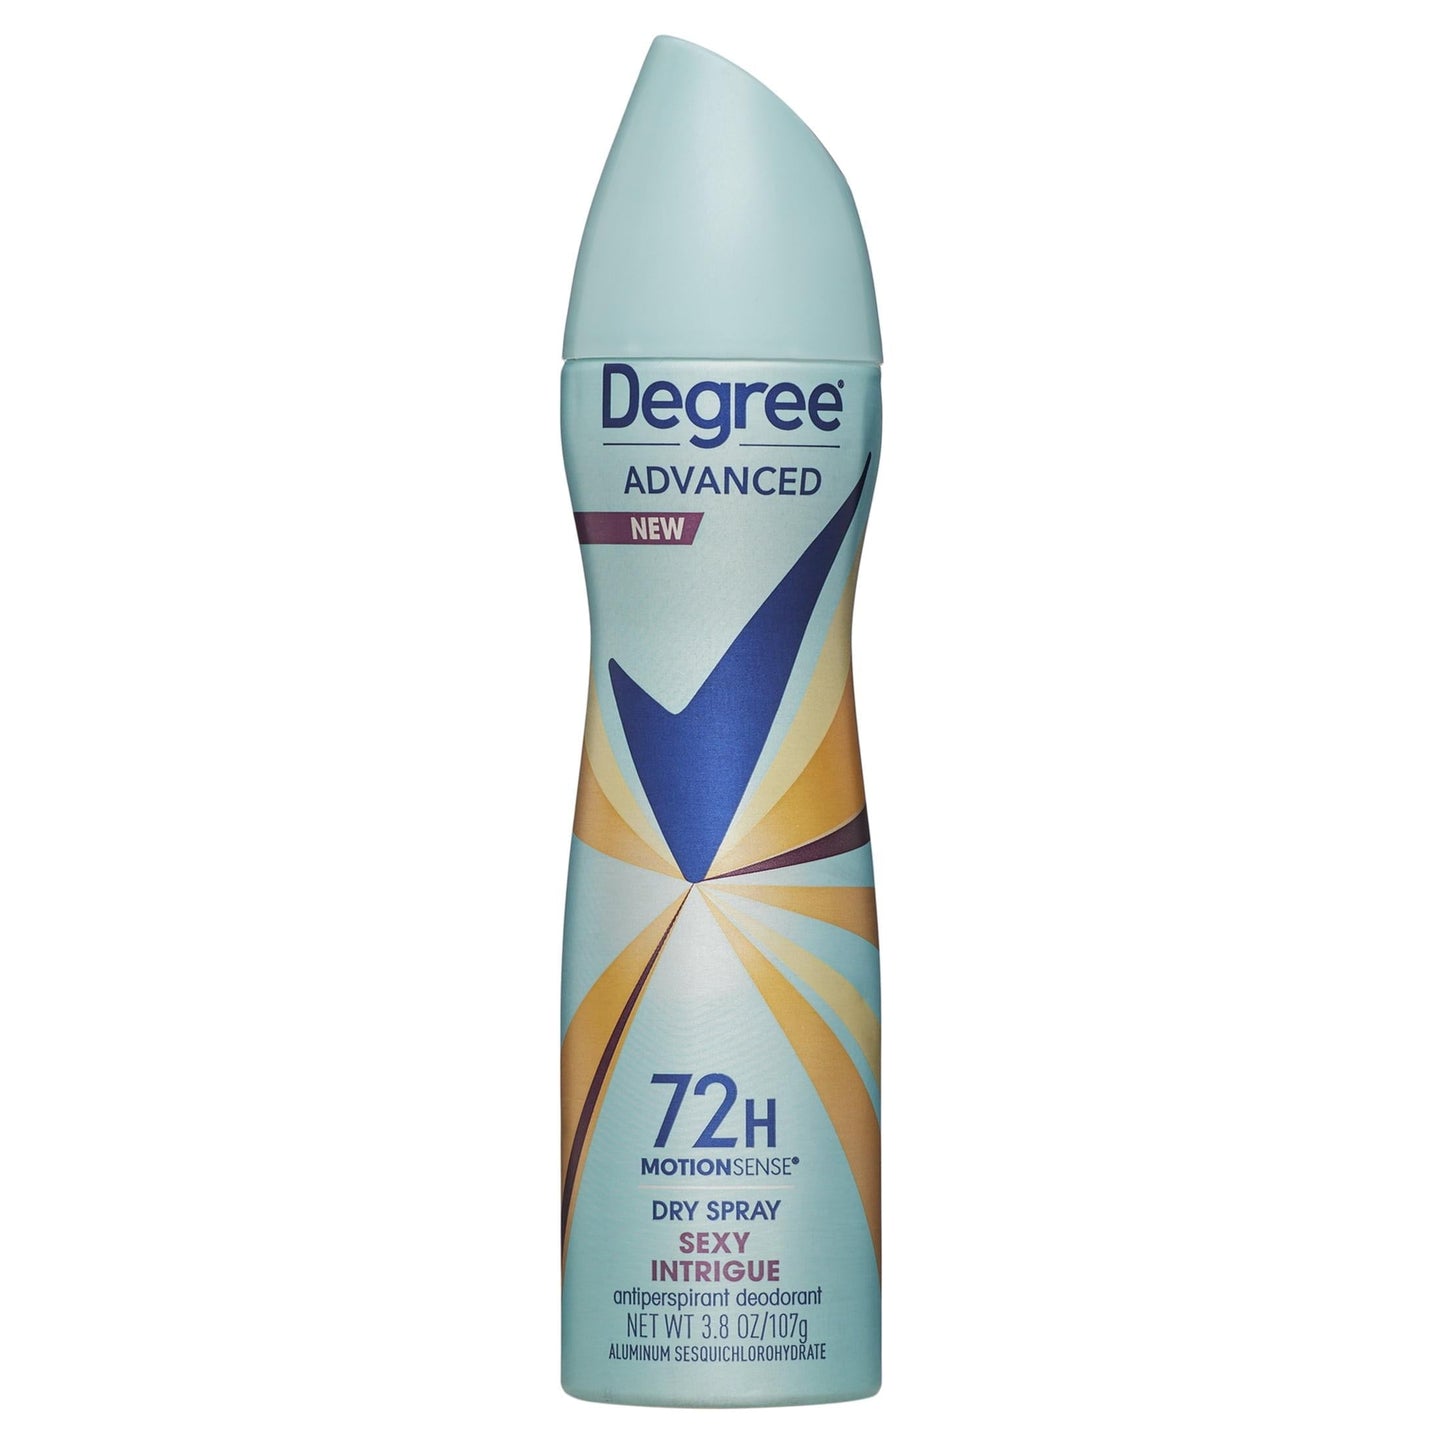 Degree Advanced Long Lasting Antiperspirant Deodorant Dry Spray Twin Pack, Sexy Intrigue, 3.8 oz